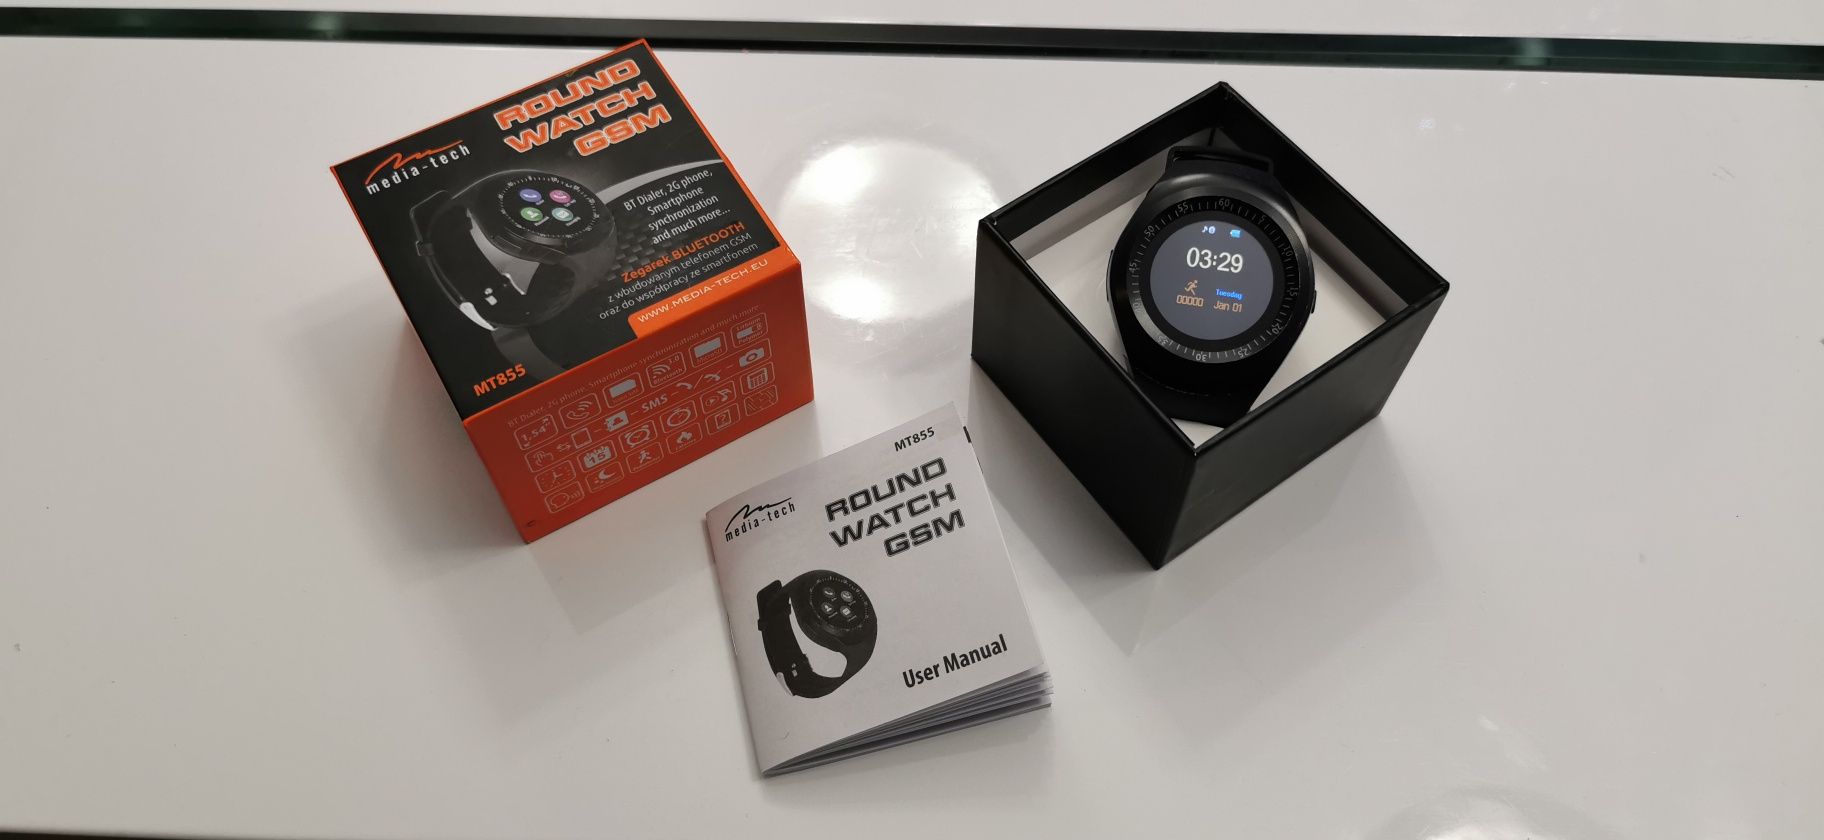 Zegarek Smartwatch MT855 ROUND WATCH GSM Media Tech